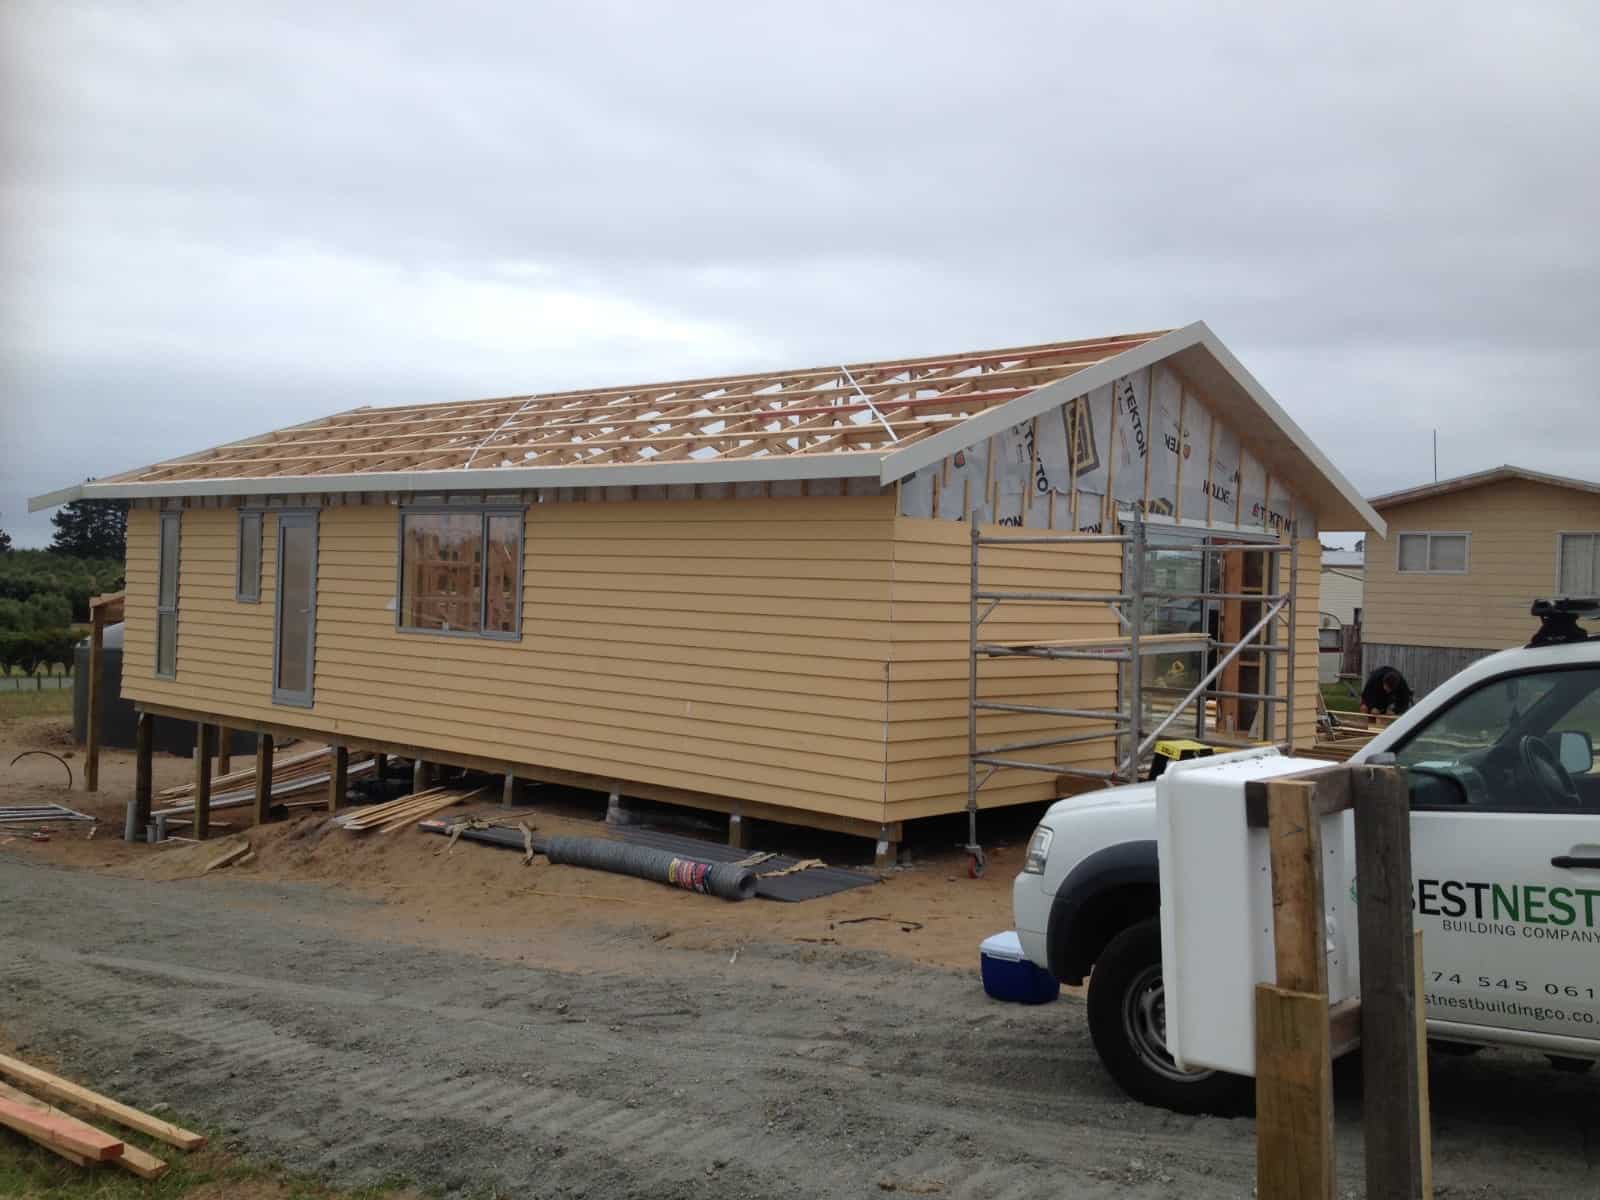 Home, Best Nest Building Co | Professional Auckland Builders